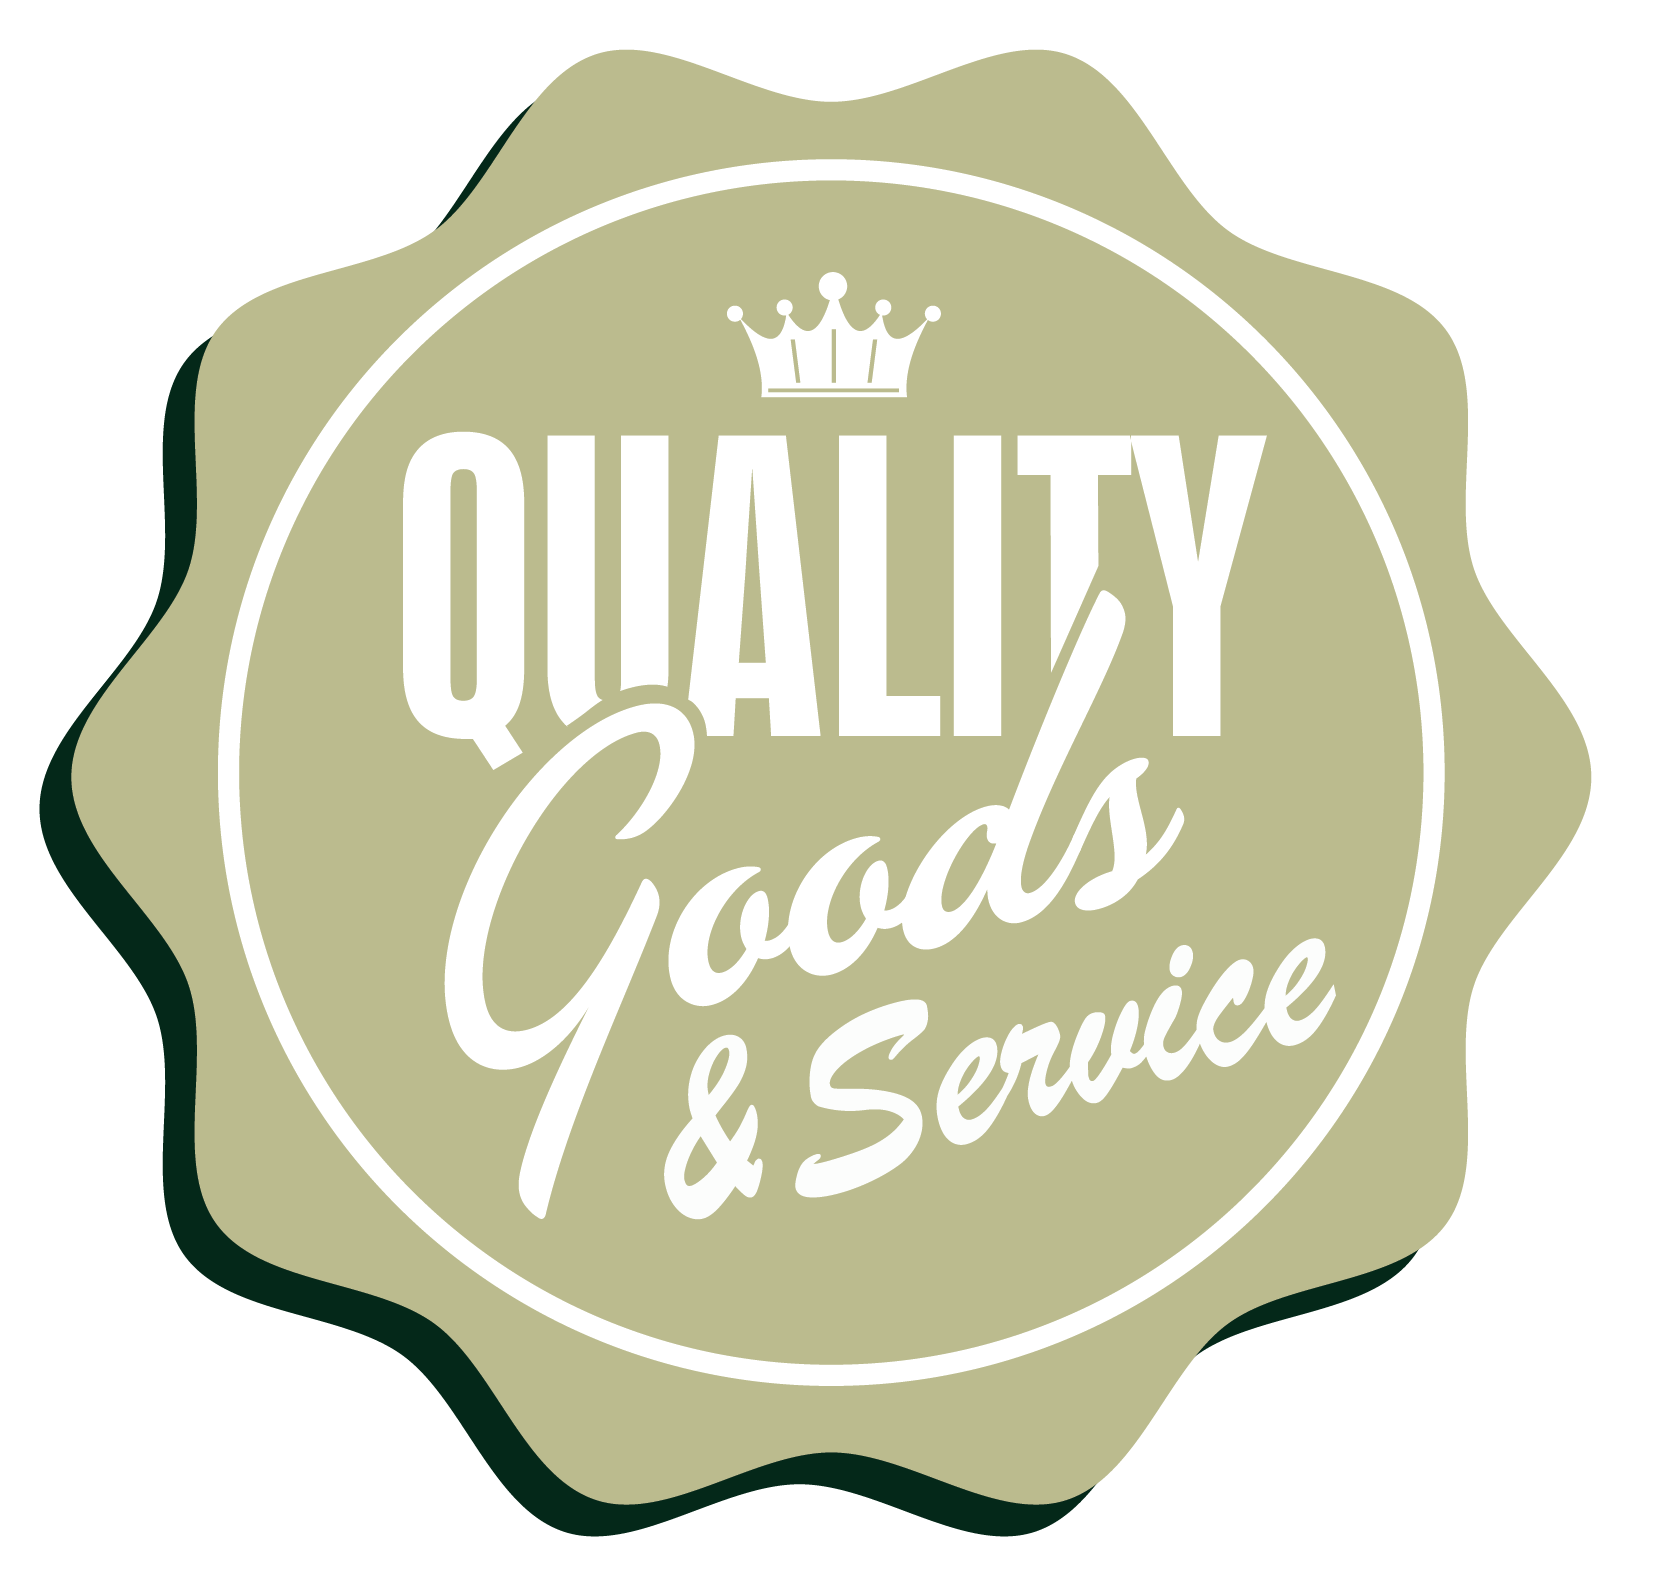 quality goods & service badge